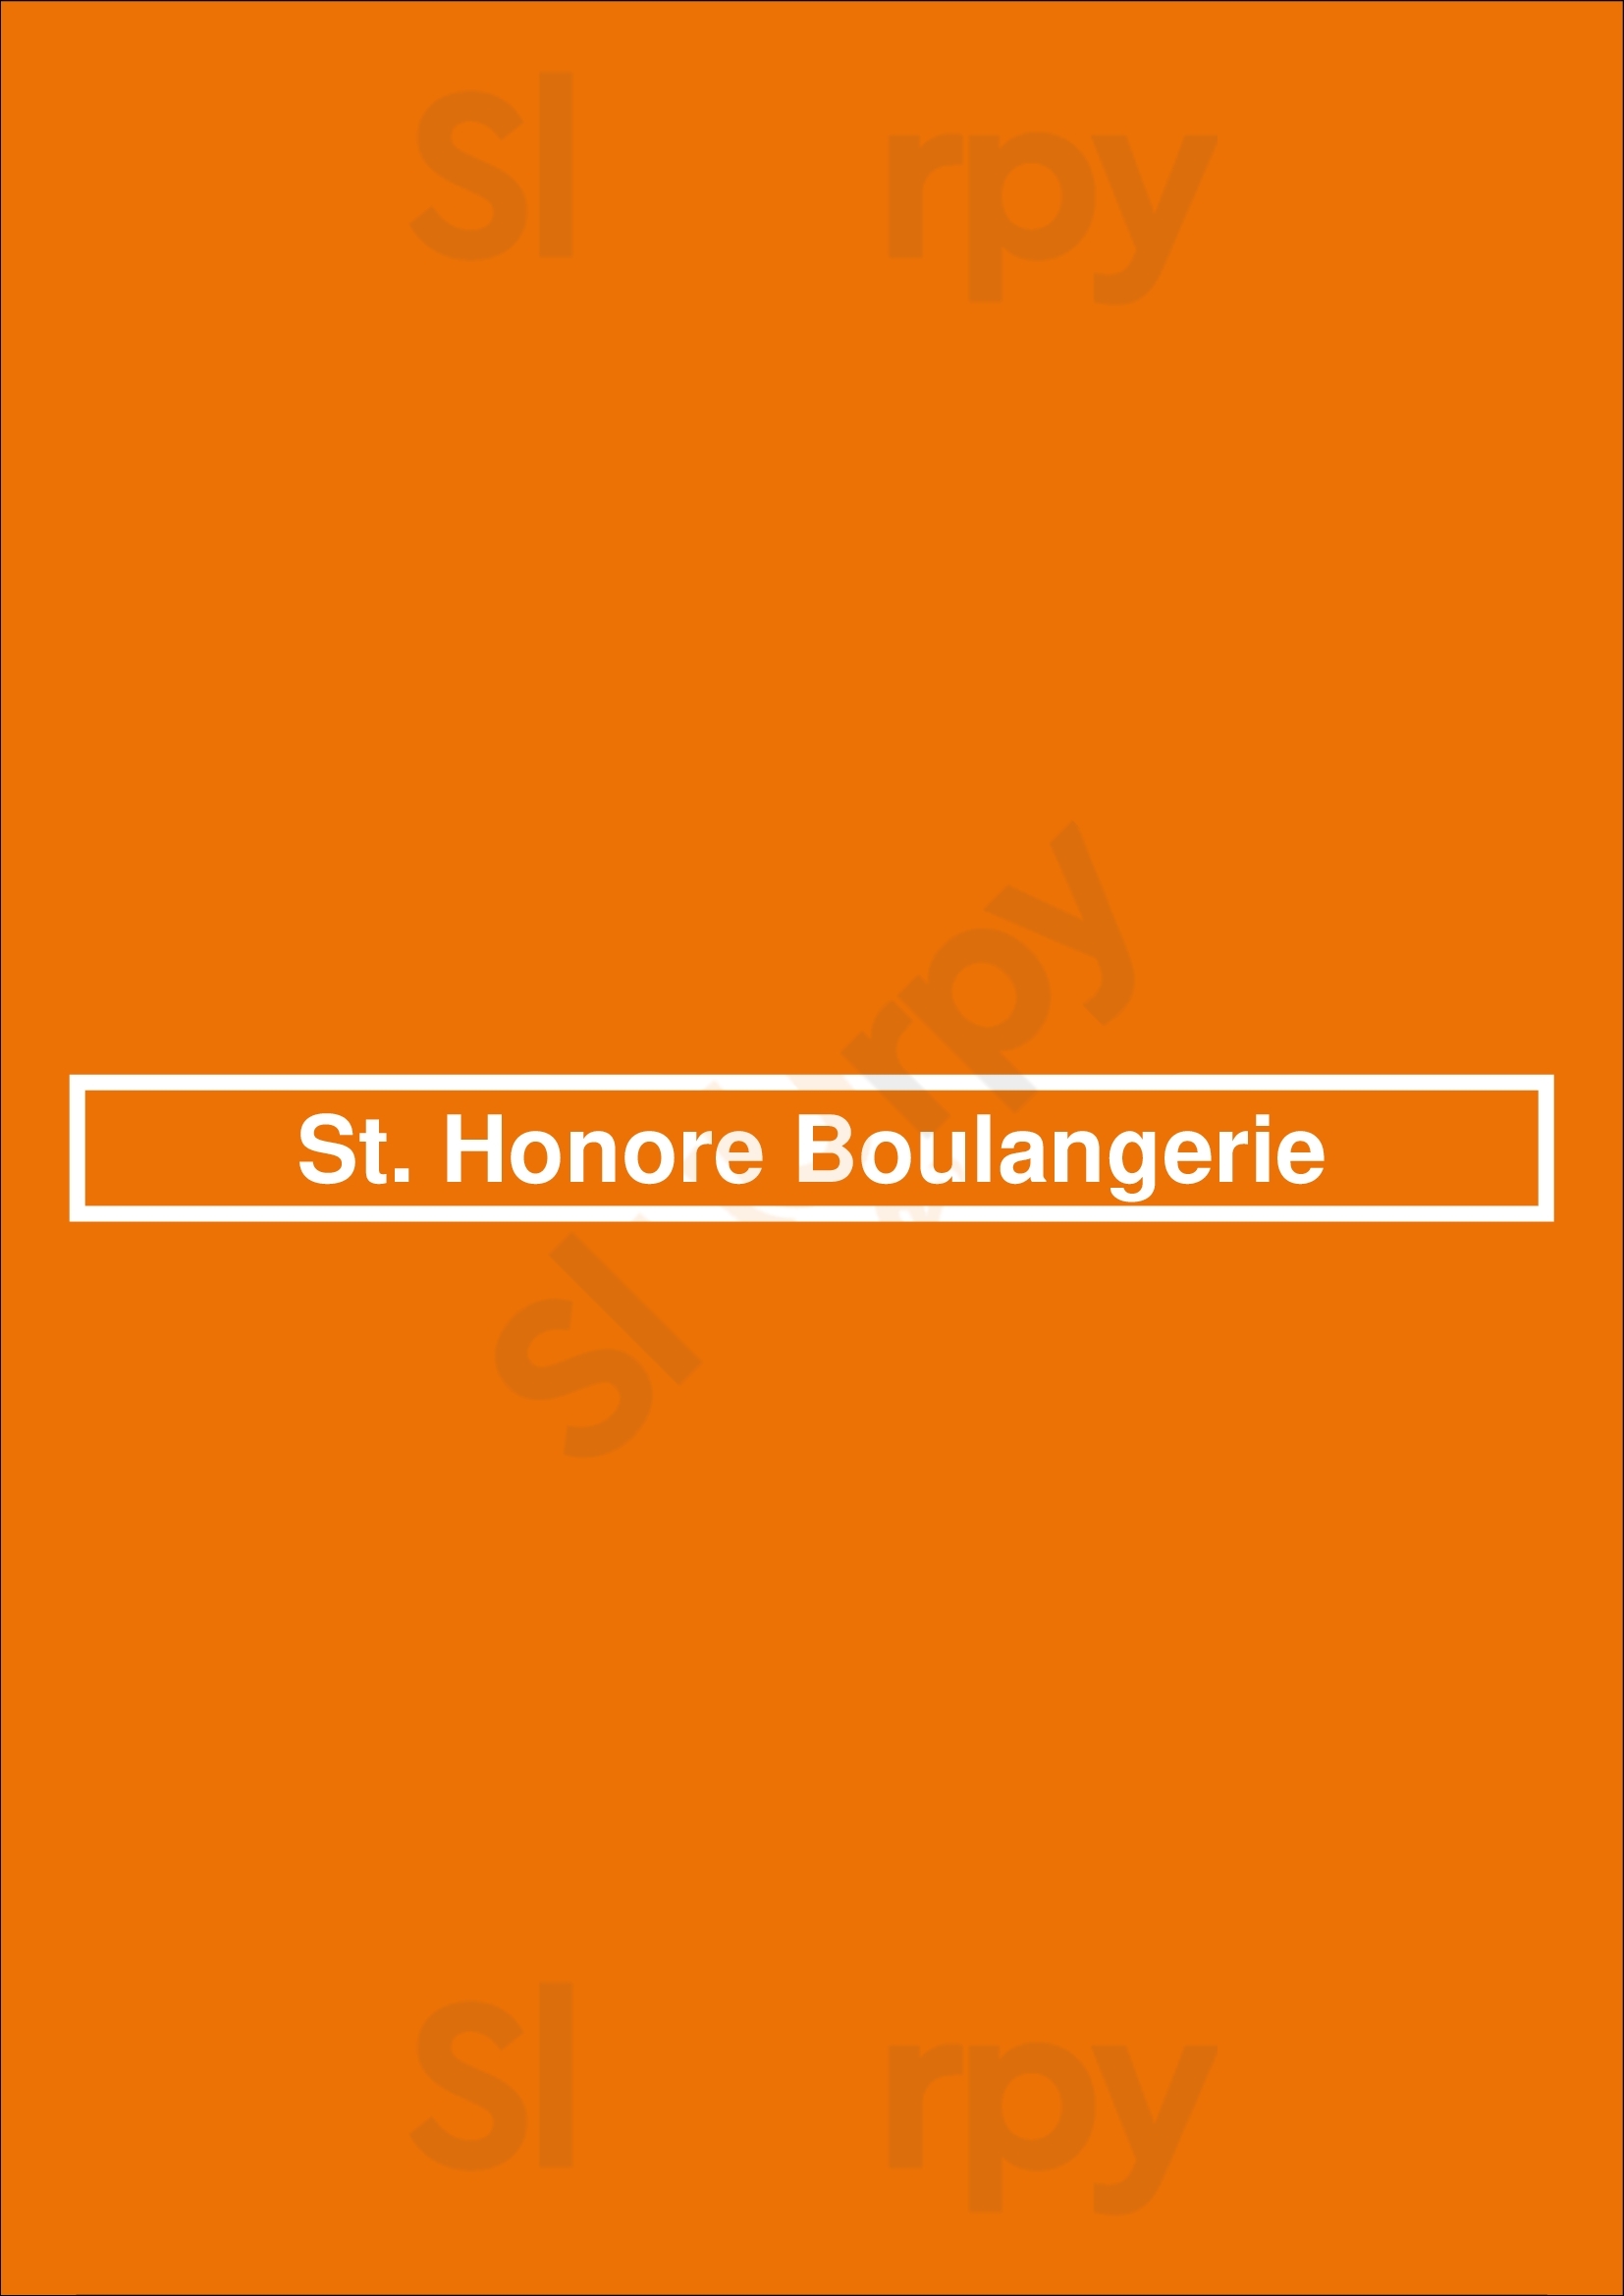 St. Honore Boulangerie Portland Menu - 1